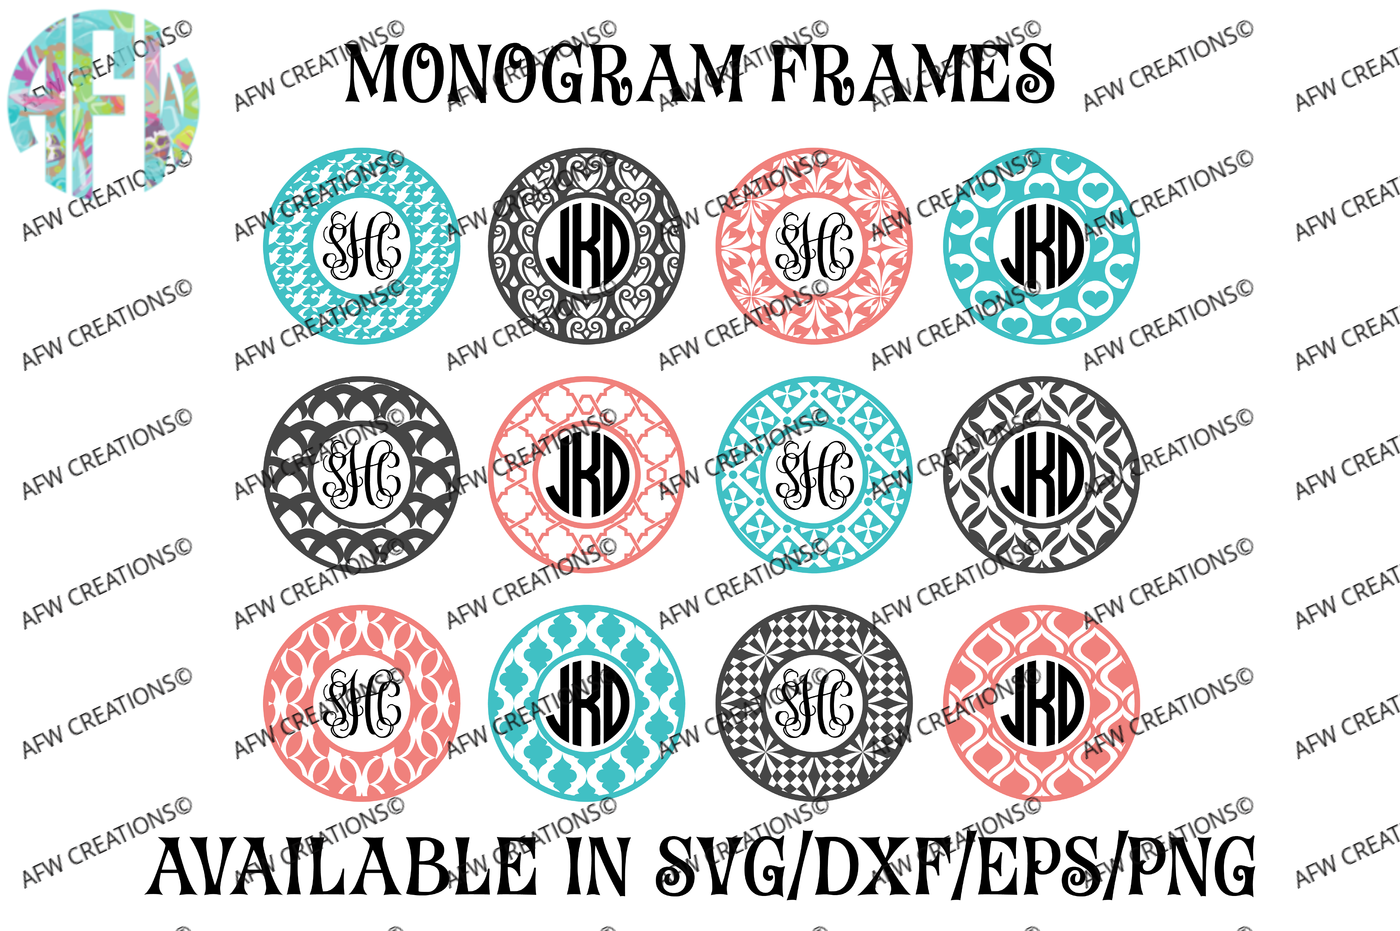 Download Circle Monogram Frames #2 - SVG, DXF, EPS Digital Cut Files By AFW Designs | TheHungryJPEG.com